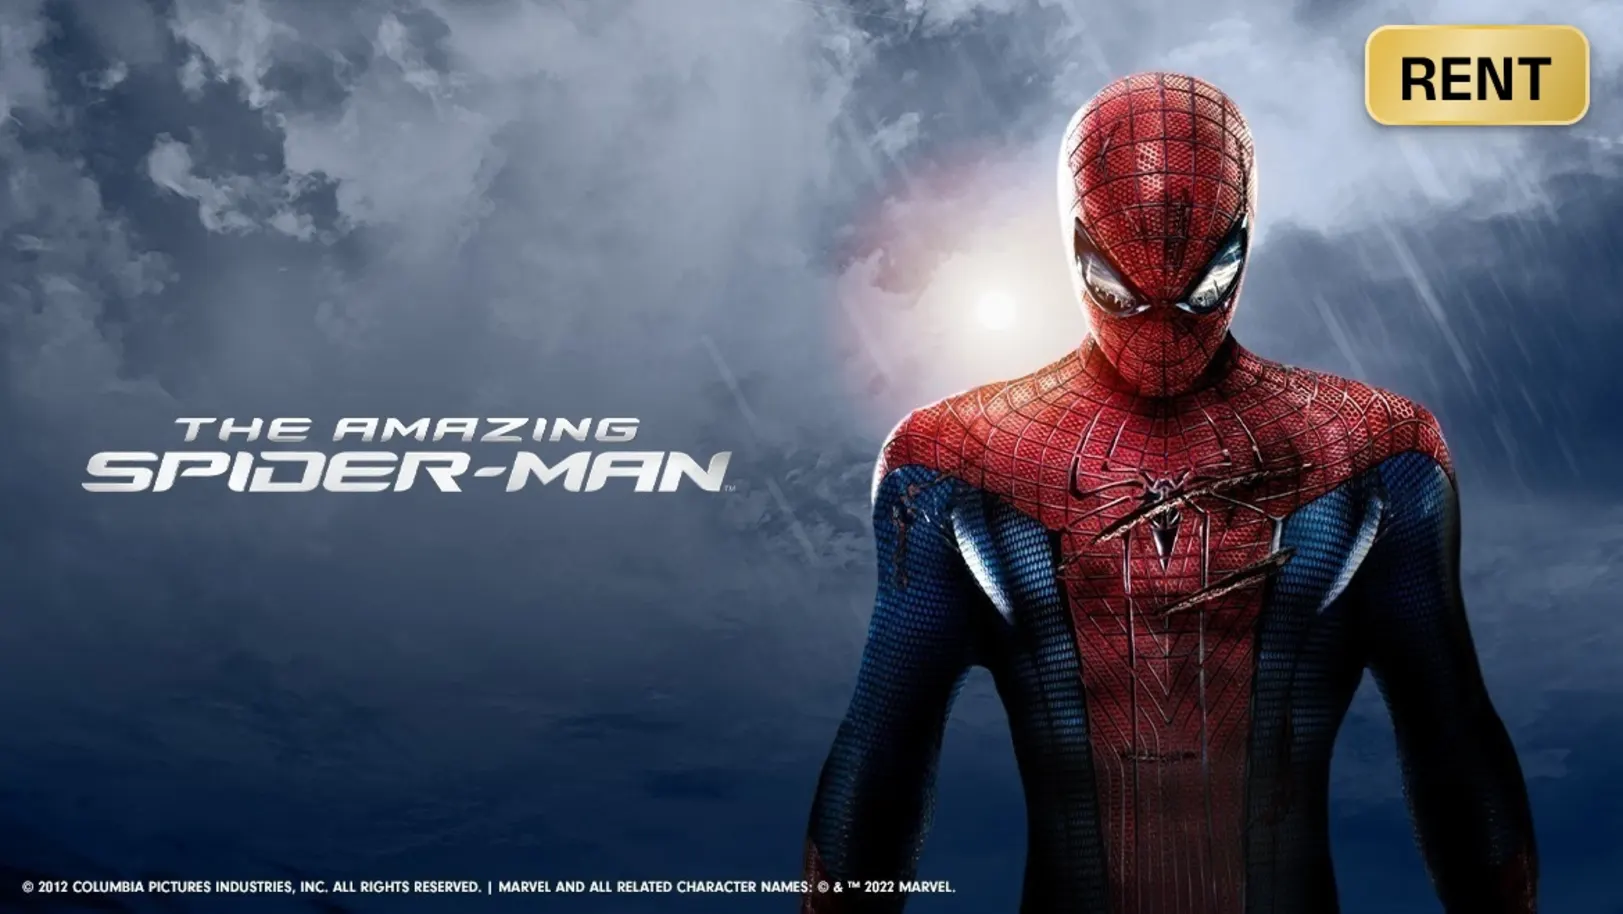 The Amazing Spider-Man Movie